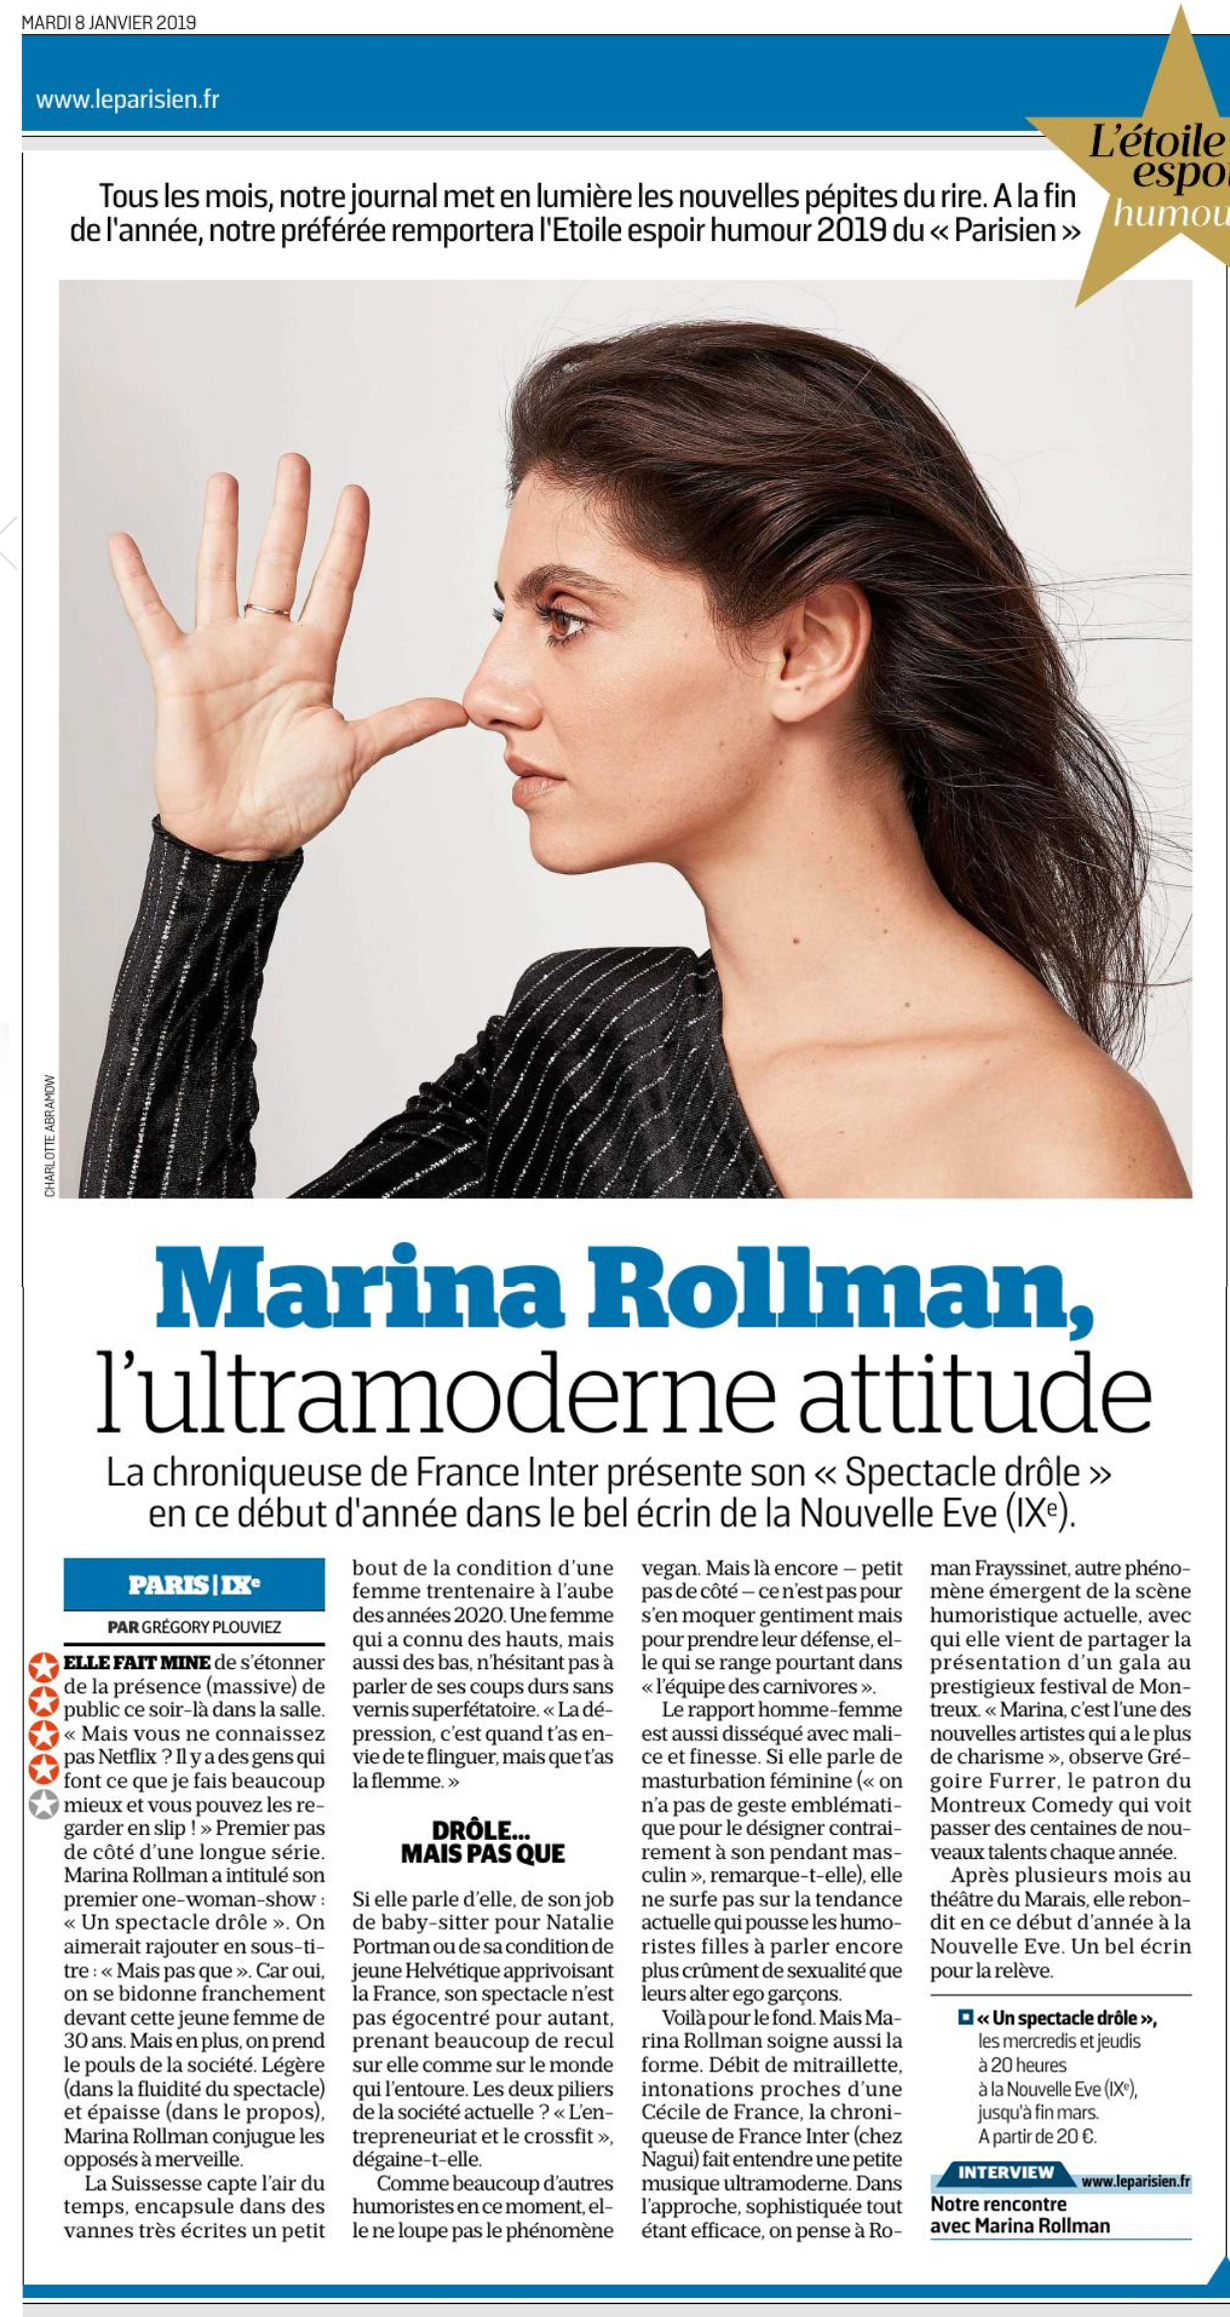 Le Parisien - Marina Rollman, l'ultramoderne attitude